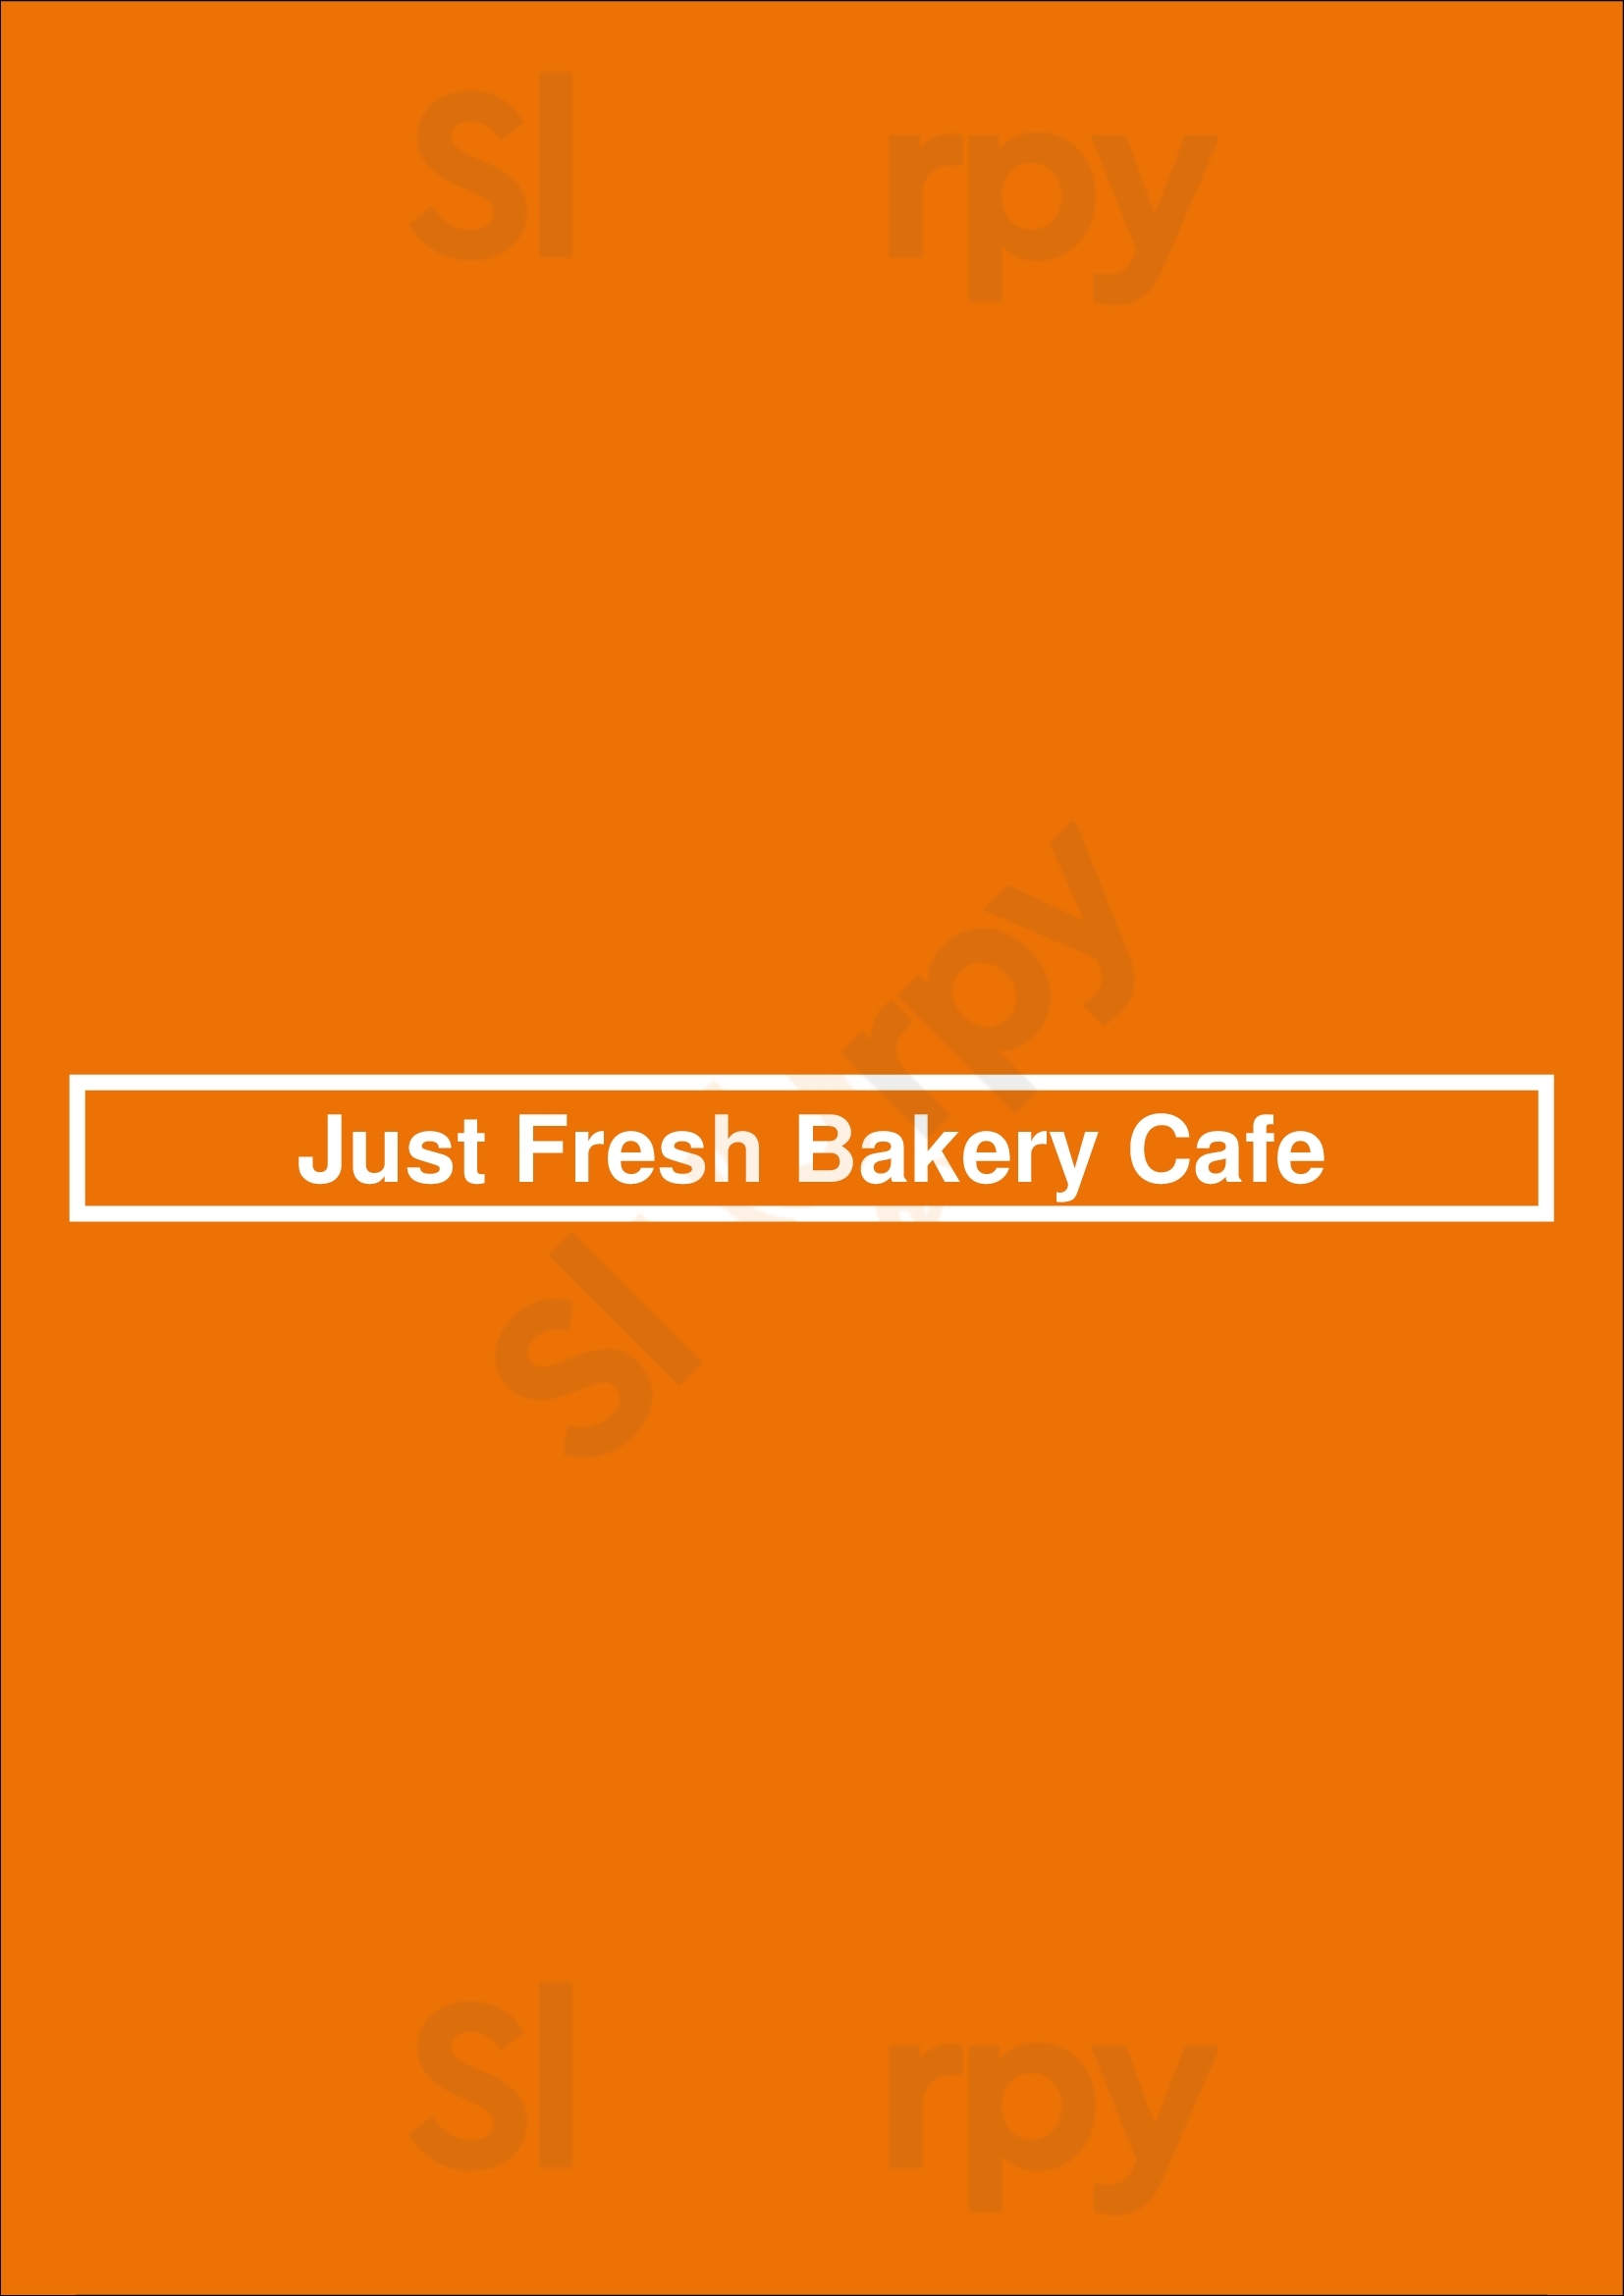 Just Fresh Bakery Cafe Charlotte Menu - 1